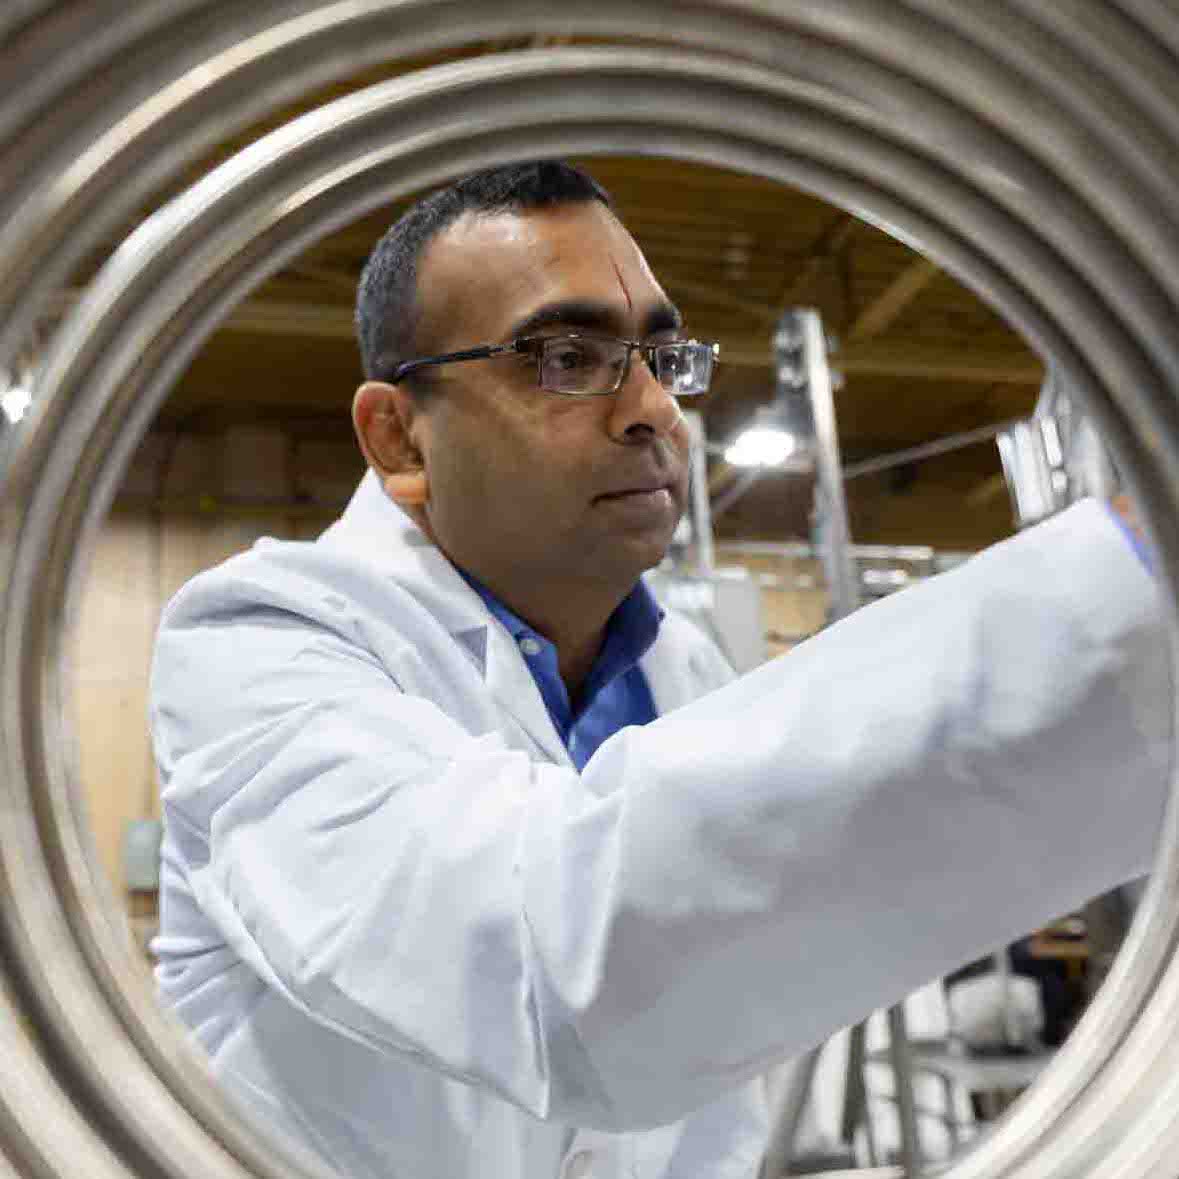 A scientist is viewed through a condenser coil